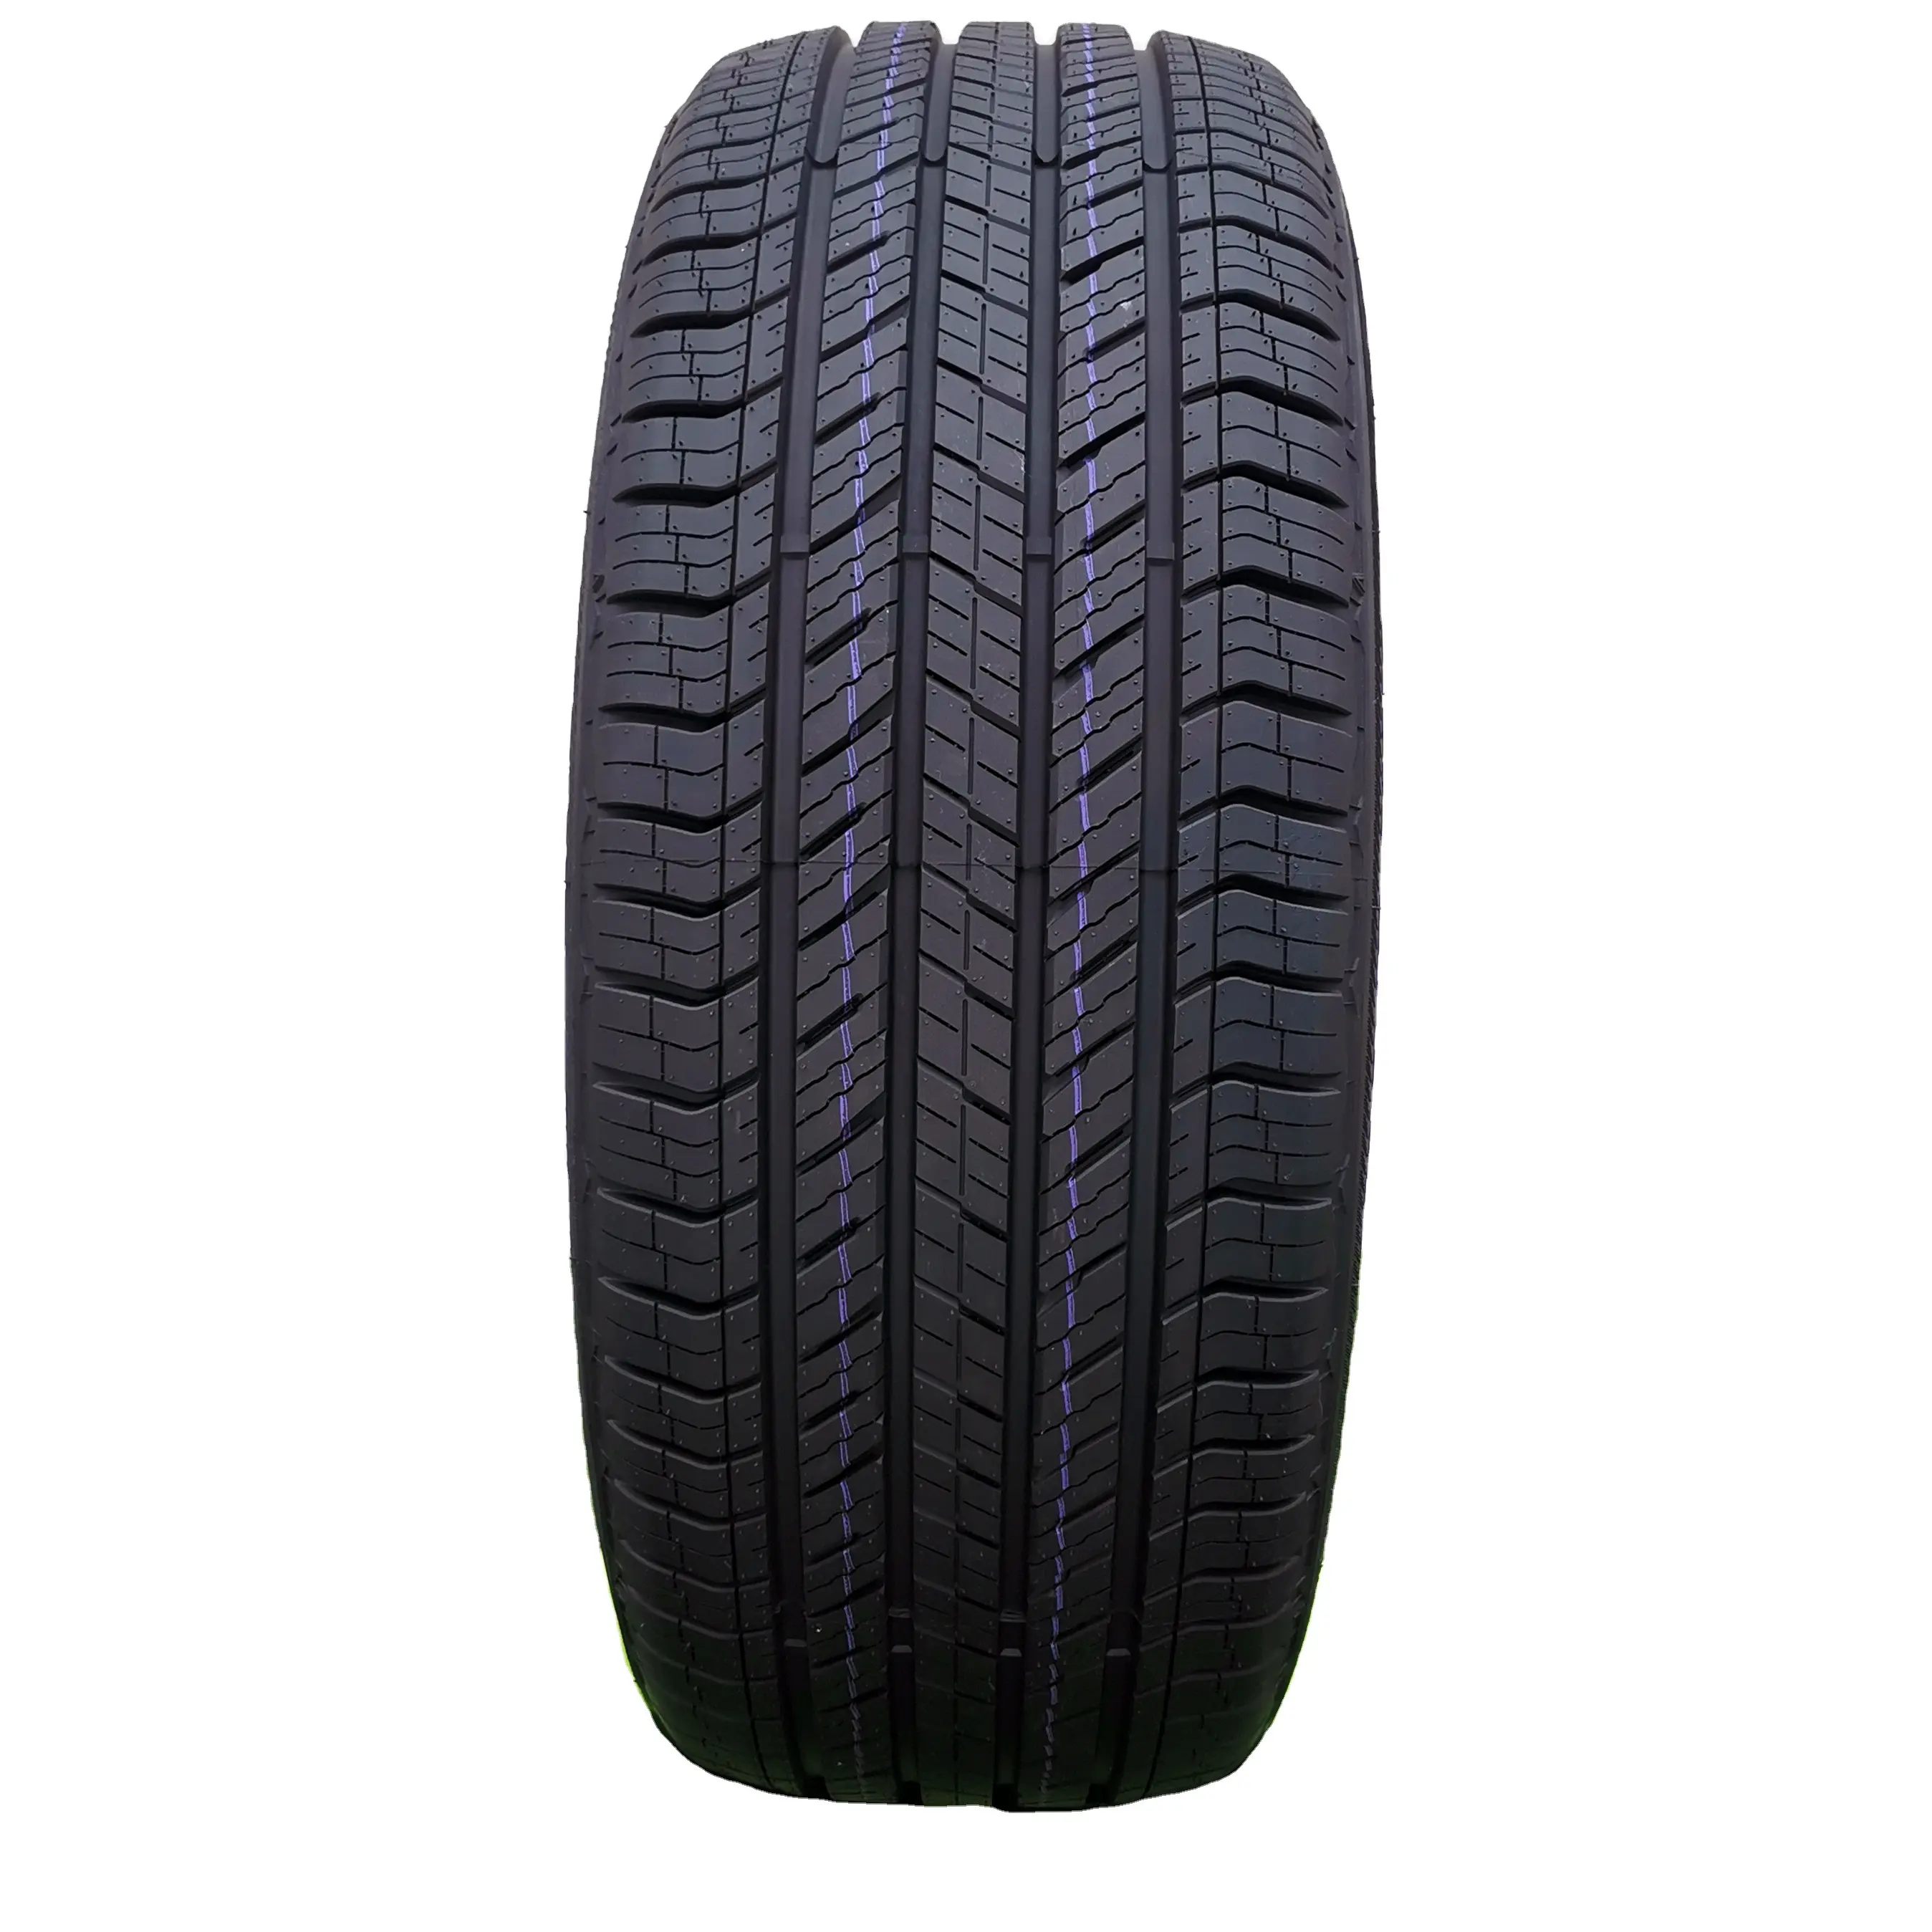 Importazione di pneumatici SUV di marca Bearway 265/60R18 dalla fabbrica di pneumatici SANLI